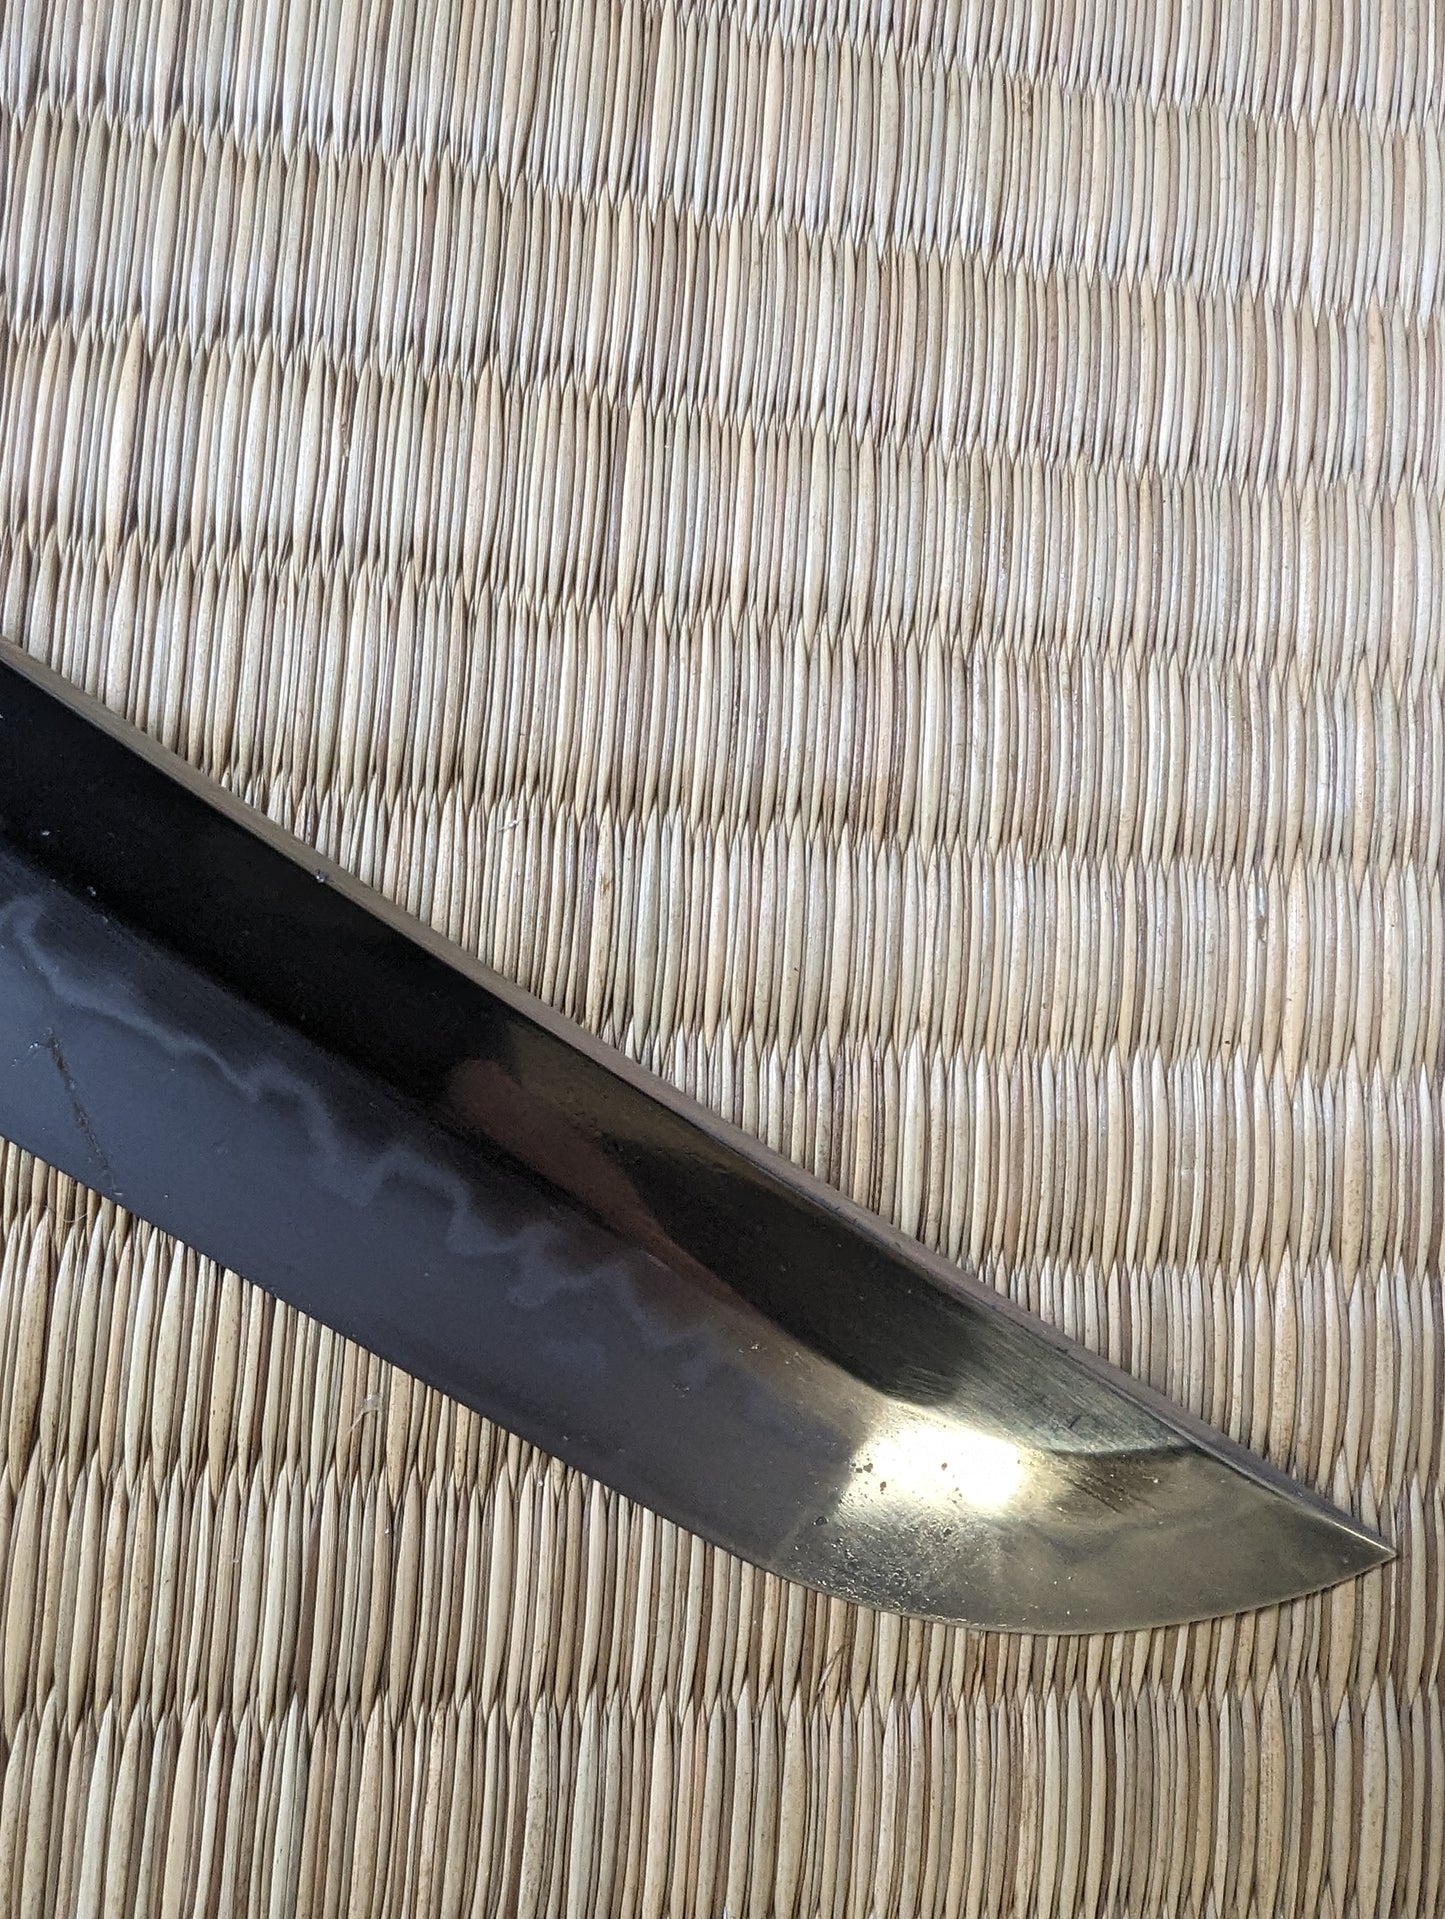 Phoenix Arms Tachi - Toyotomi - folded steel, clay tempered, hadori polish